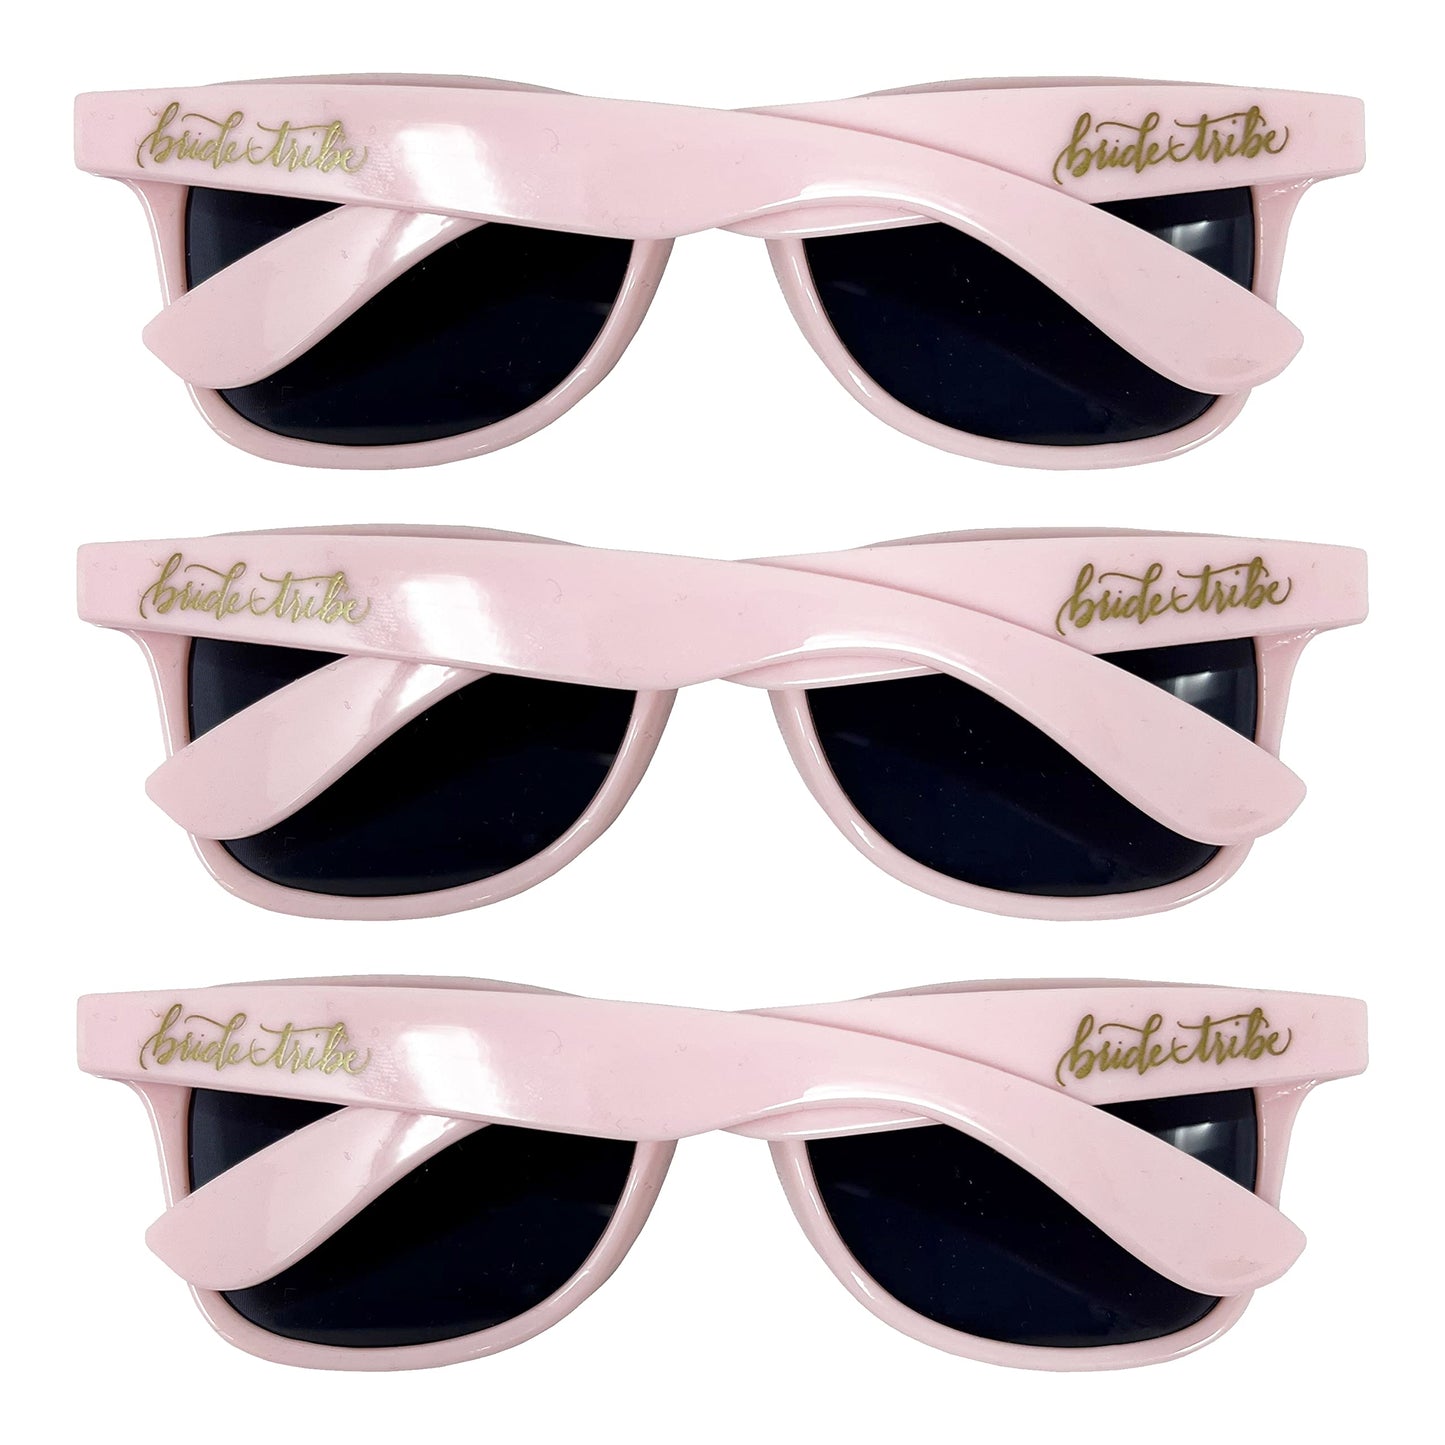 Bachelorette Sunglasses - Bundle